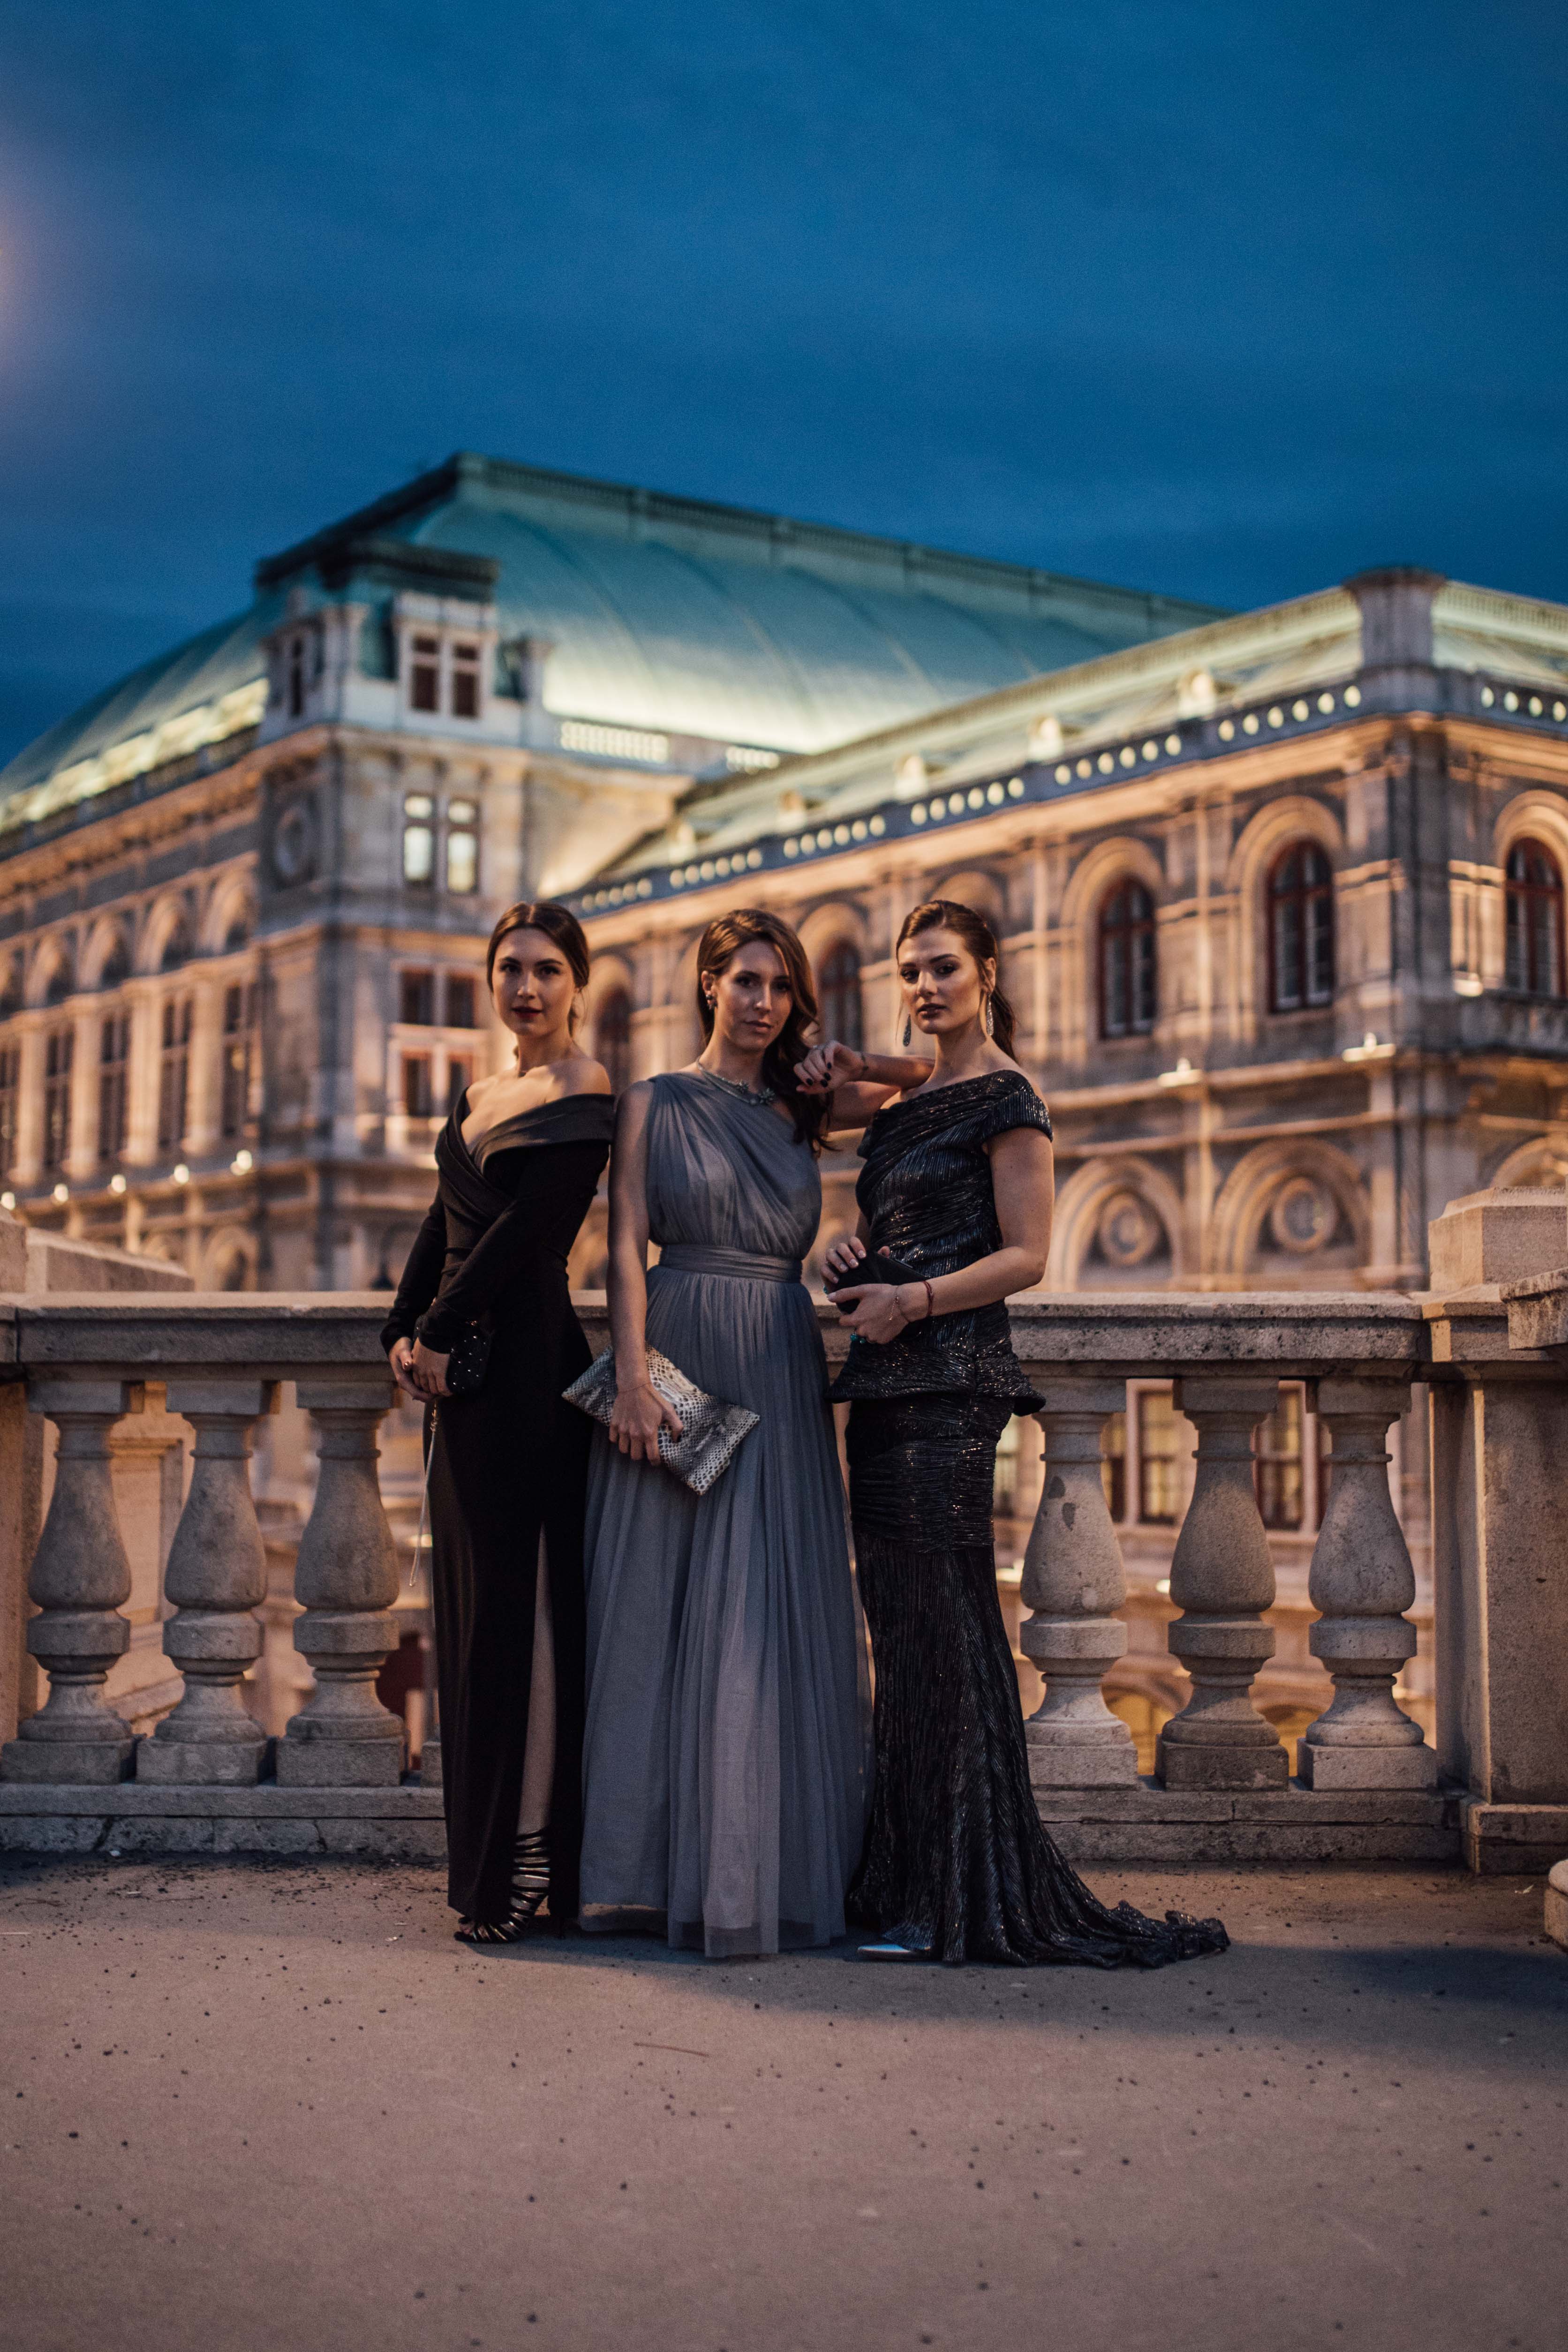 Vienna Opera Ball 2017: A Fairytale Moment | You rock my life